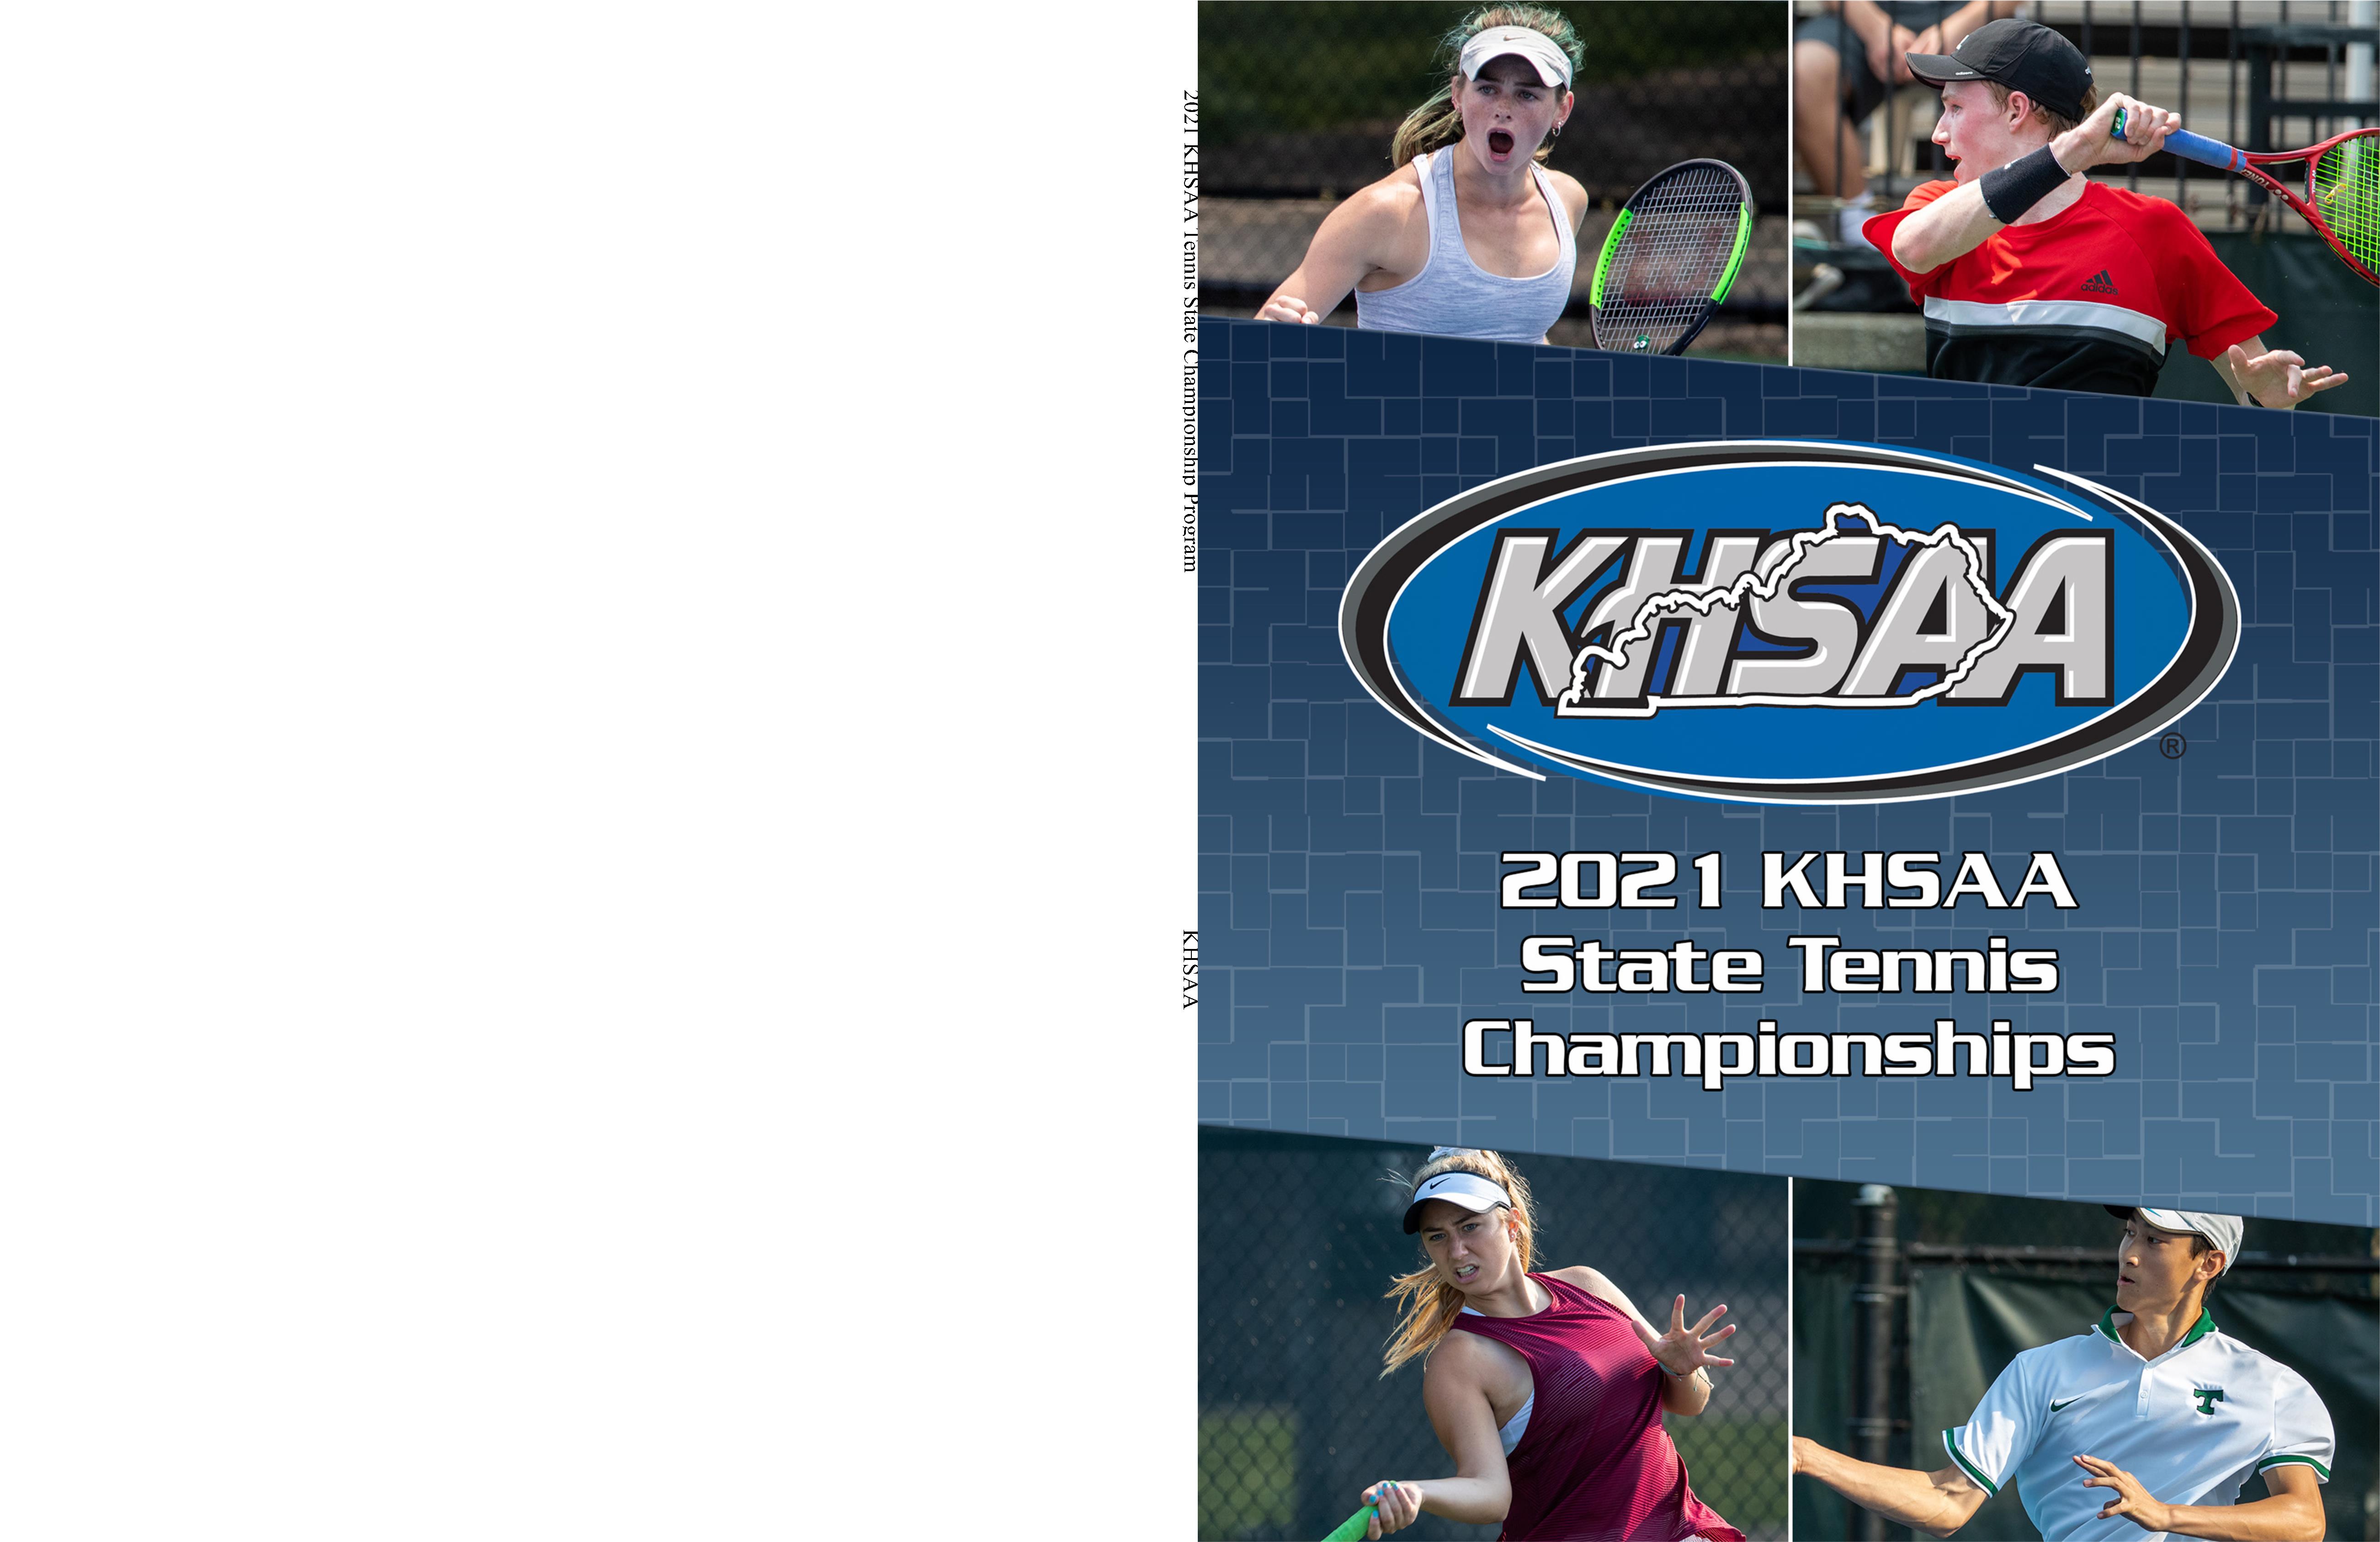 2021 KHSAA Tennis State Championship Program cover image